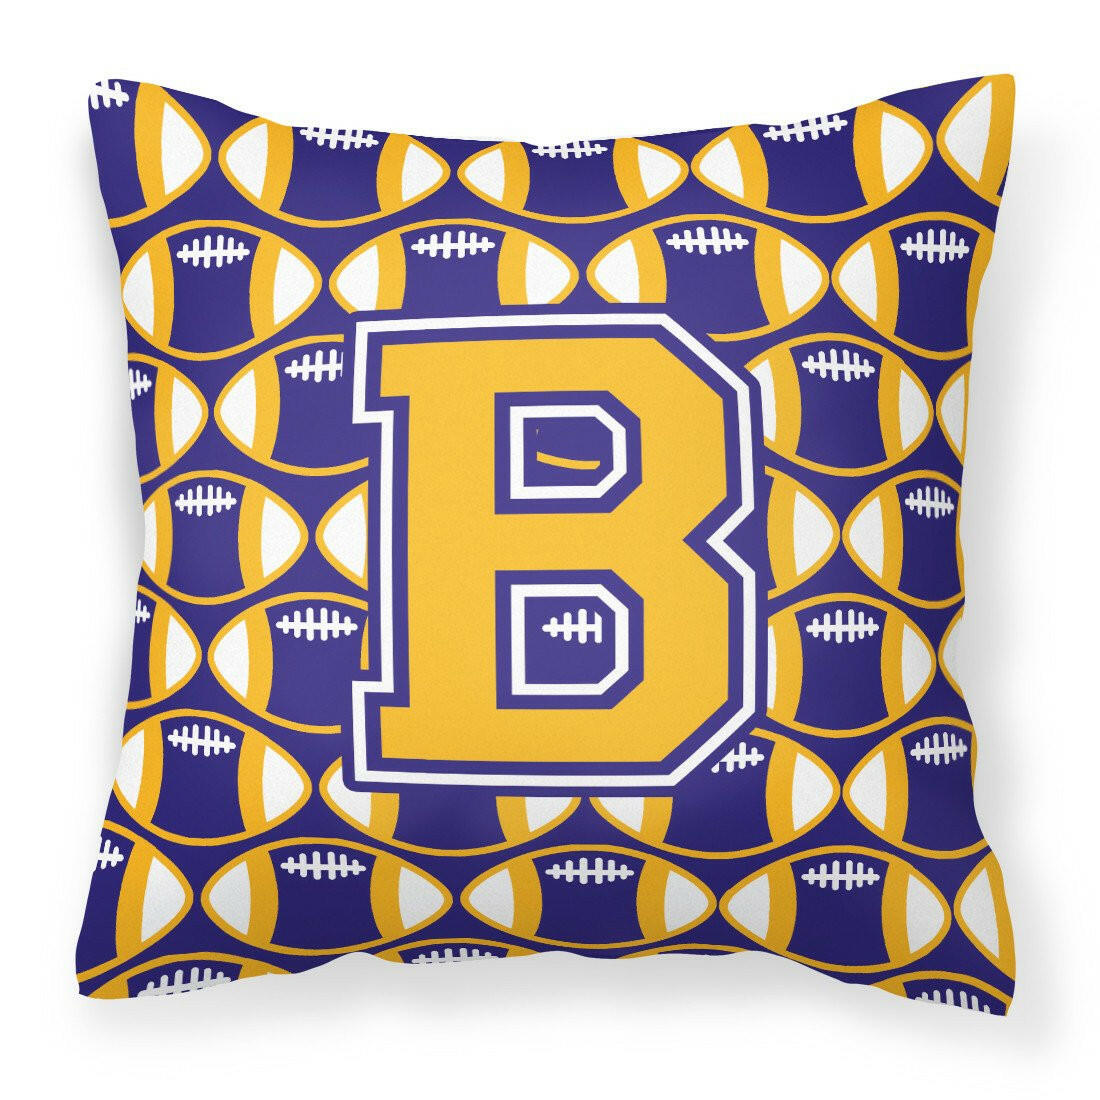 Letter B Football Purple and Gold Fabric Decorative Pillow CJ1064-BPW1414 by Caroline's Treasures